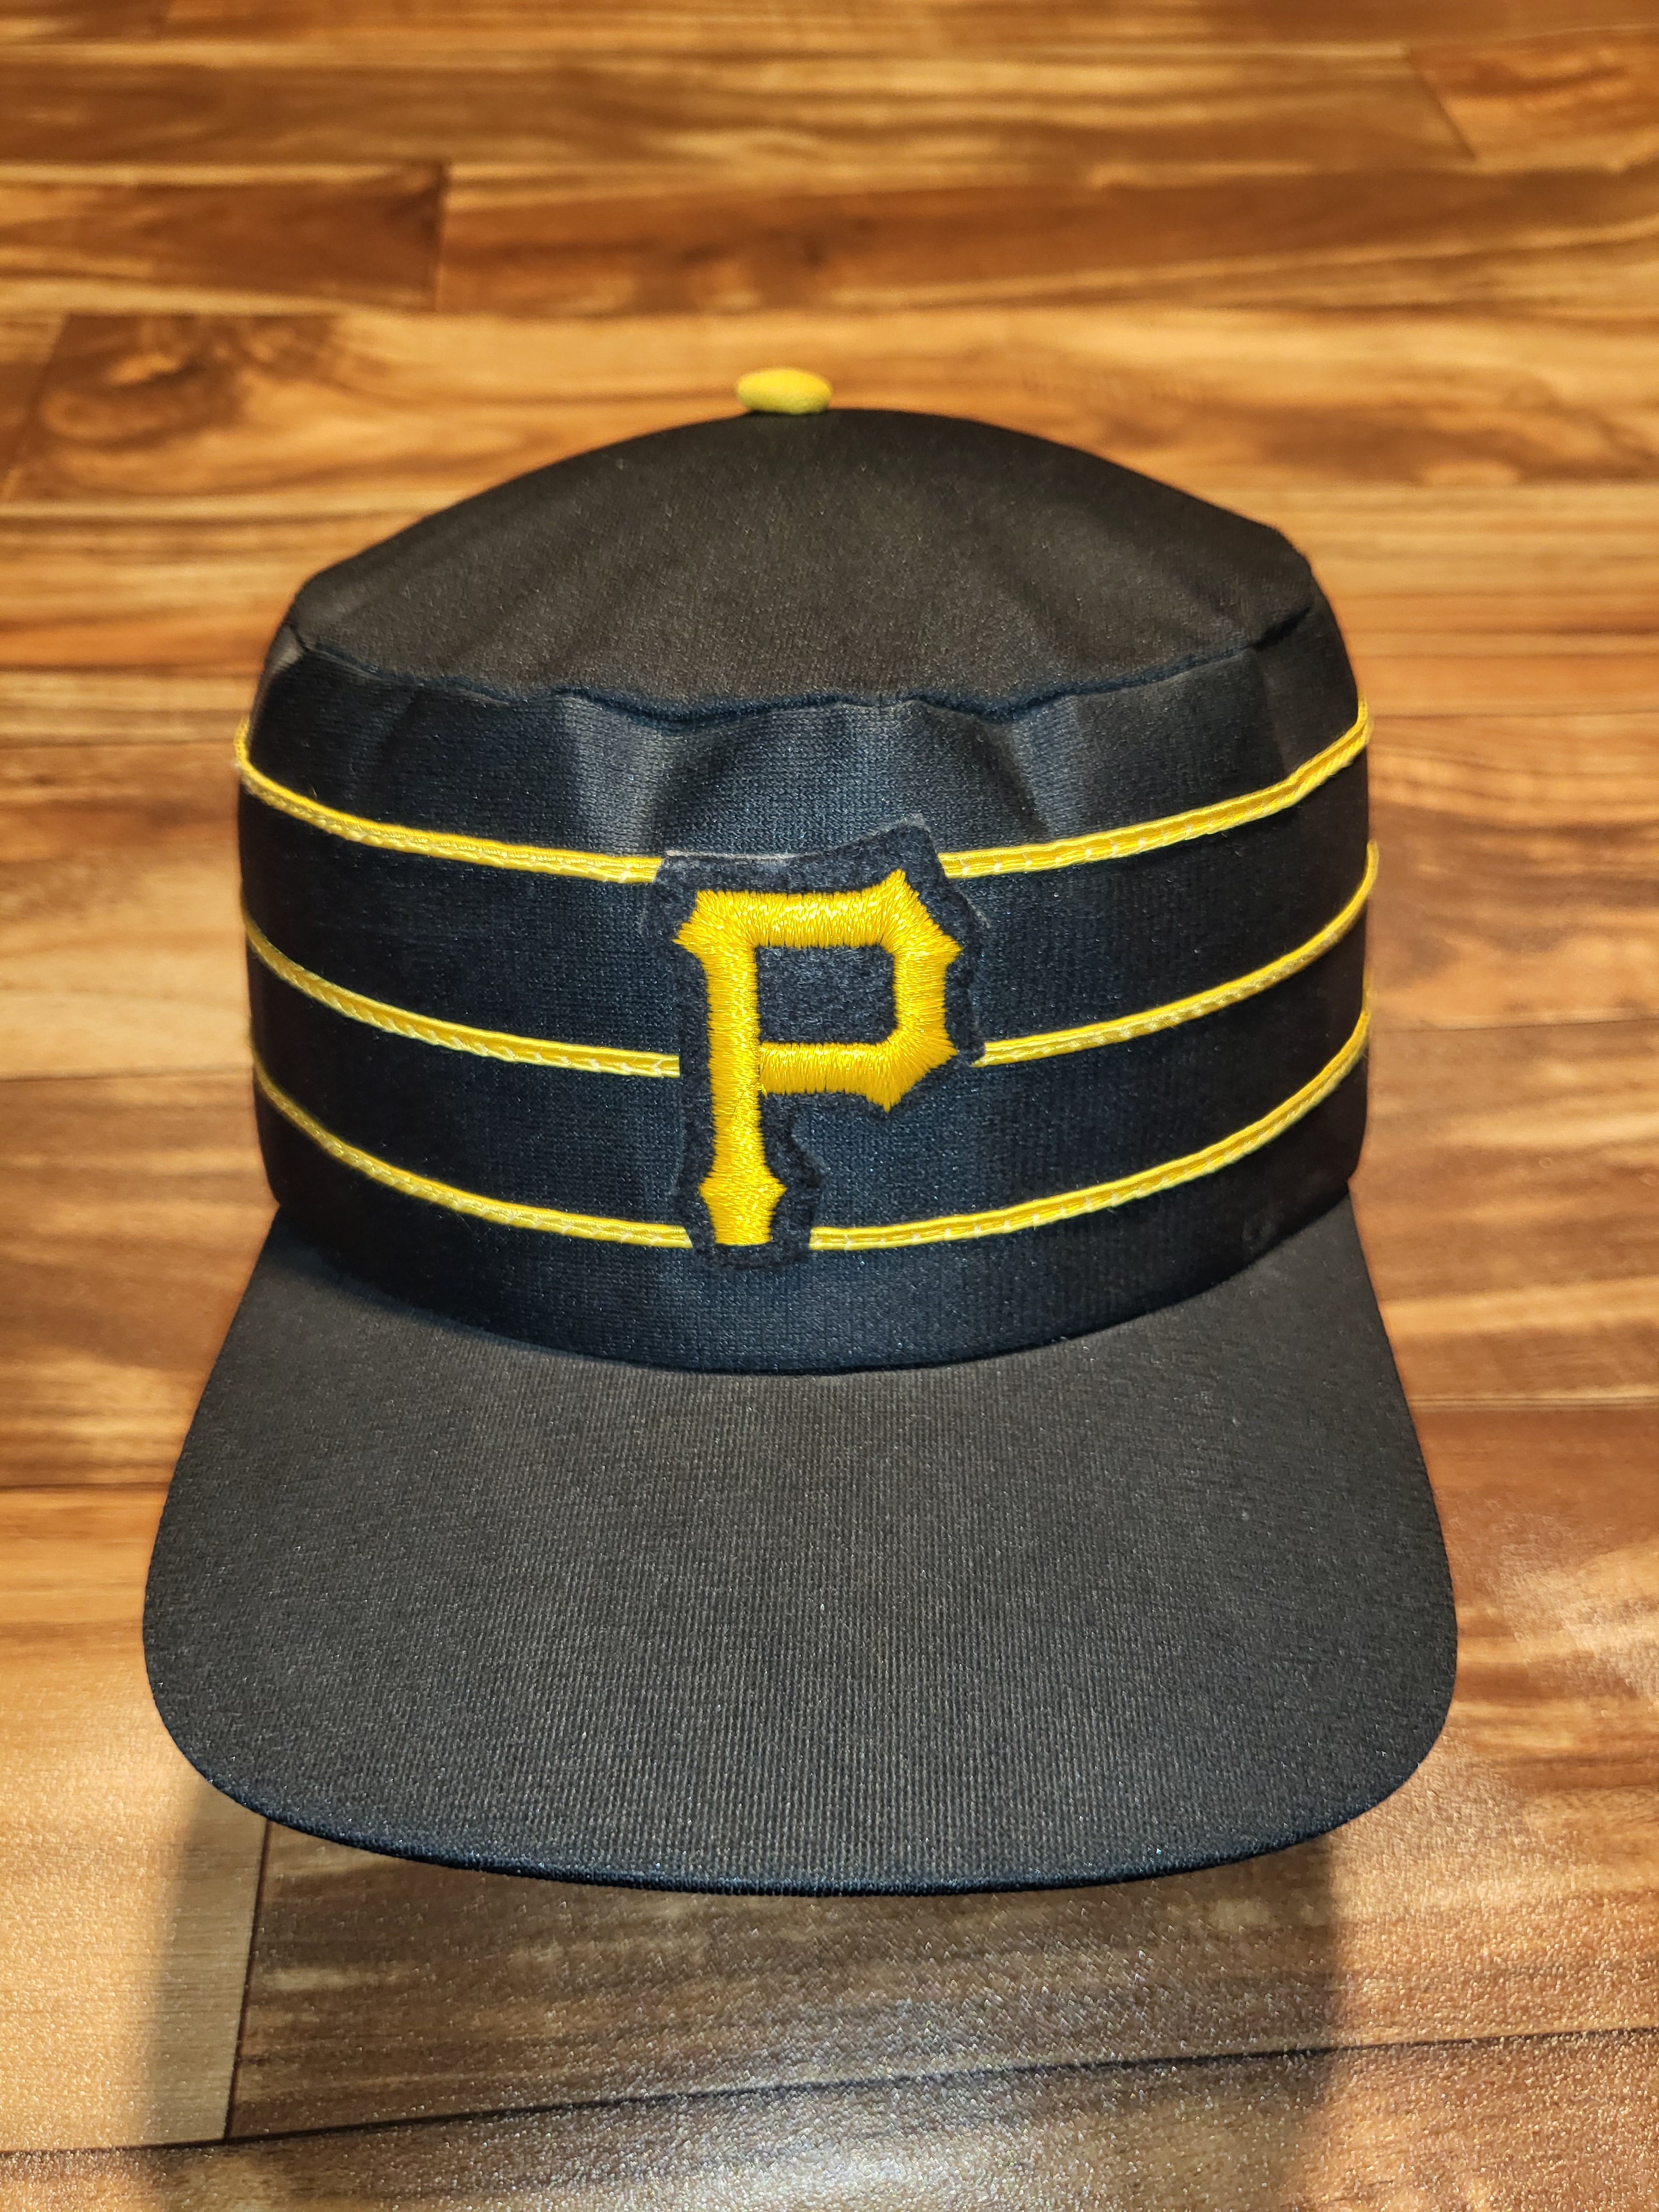 pirates baseball cap